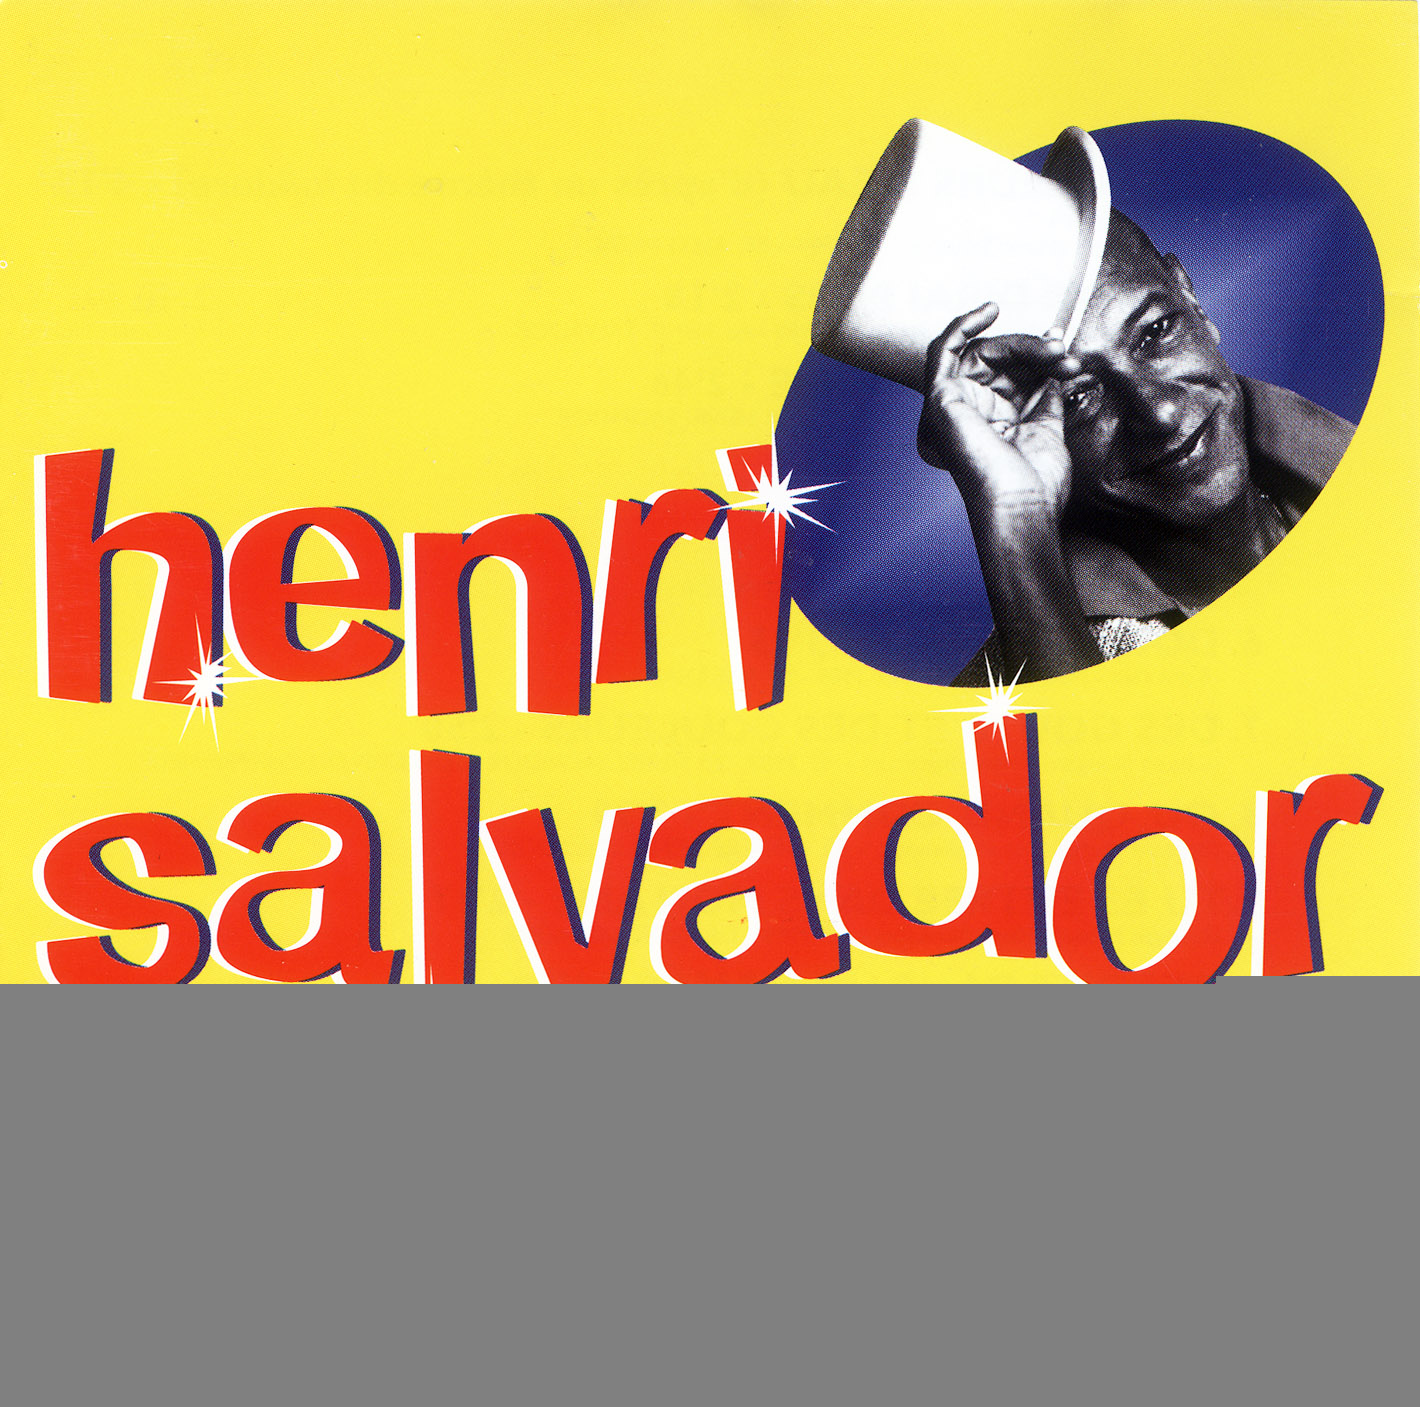 Henri Salvador album picture